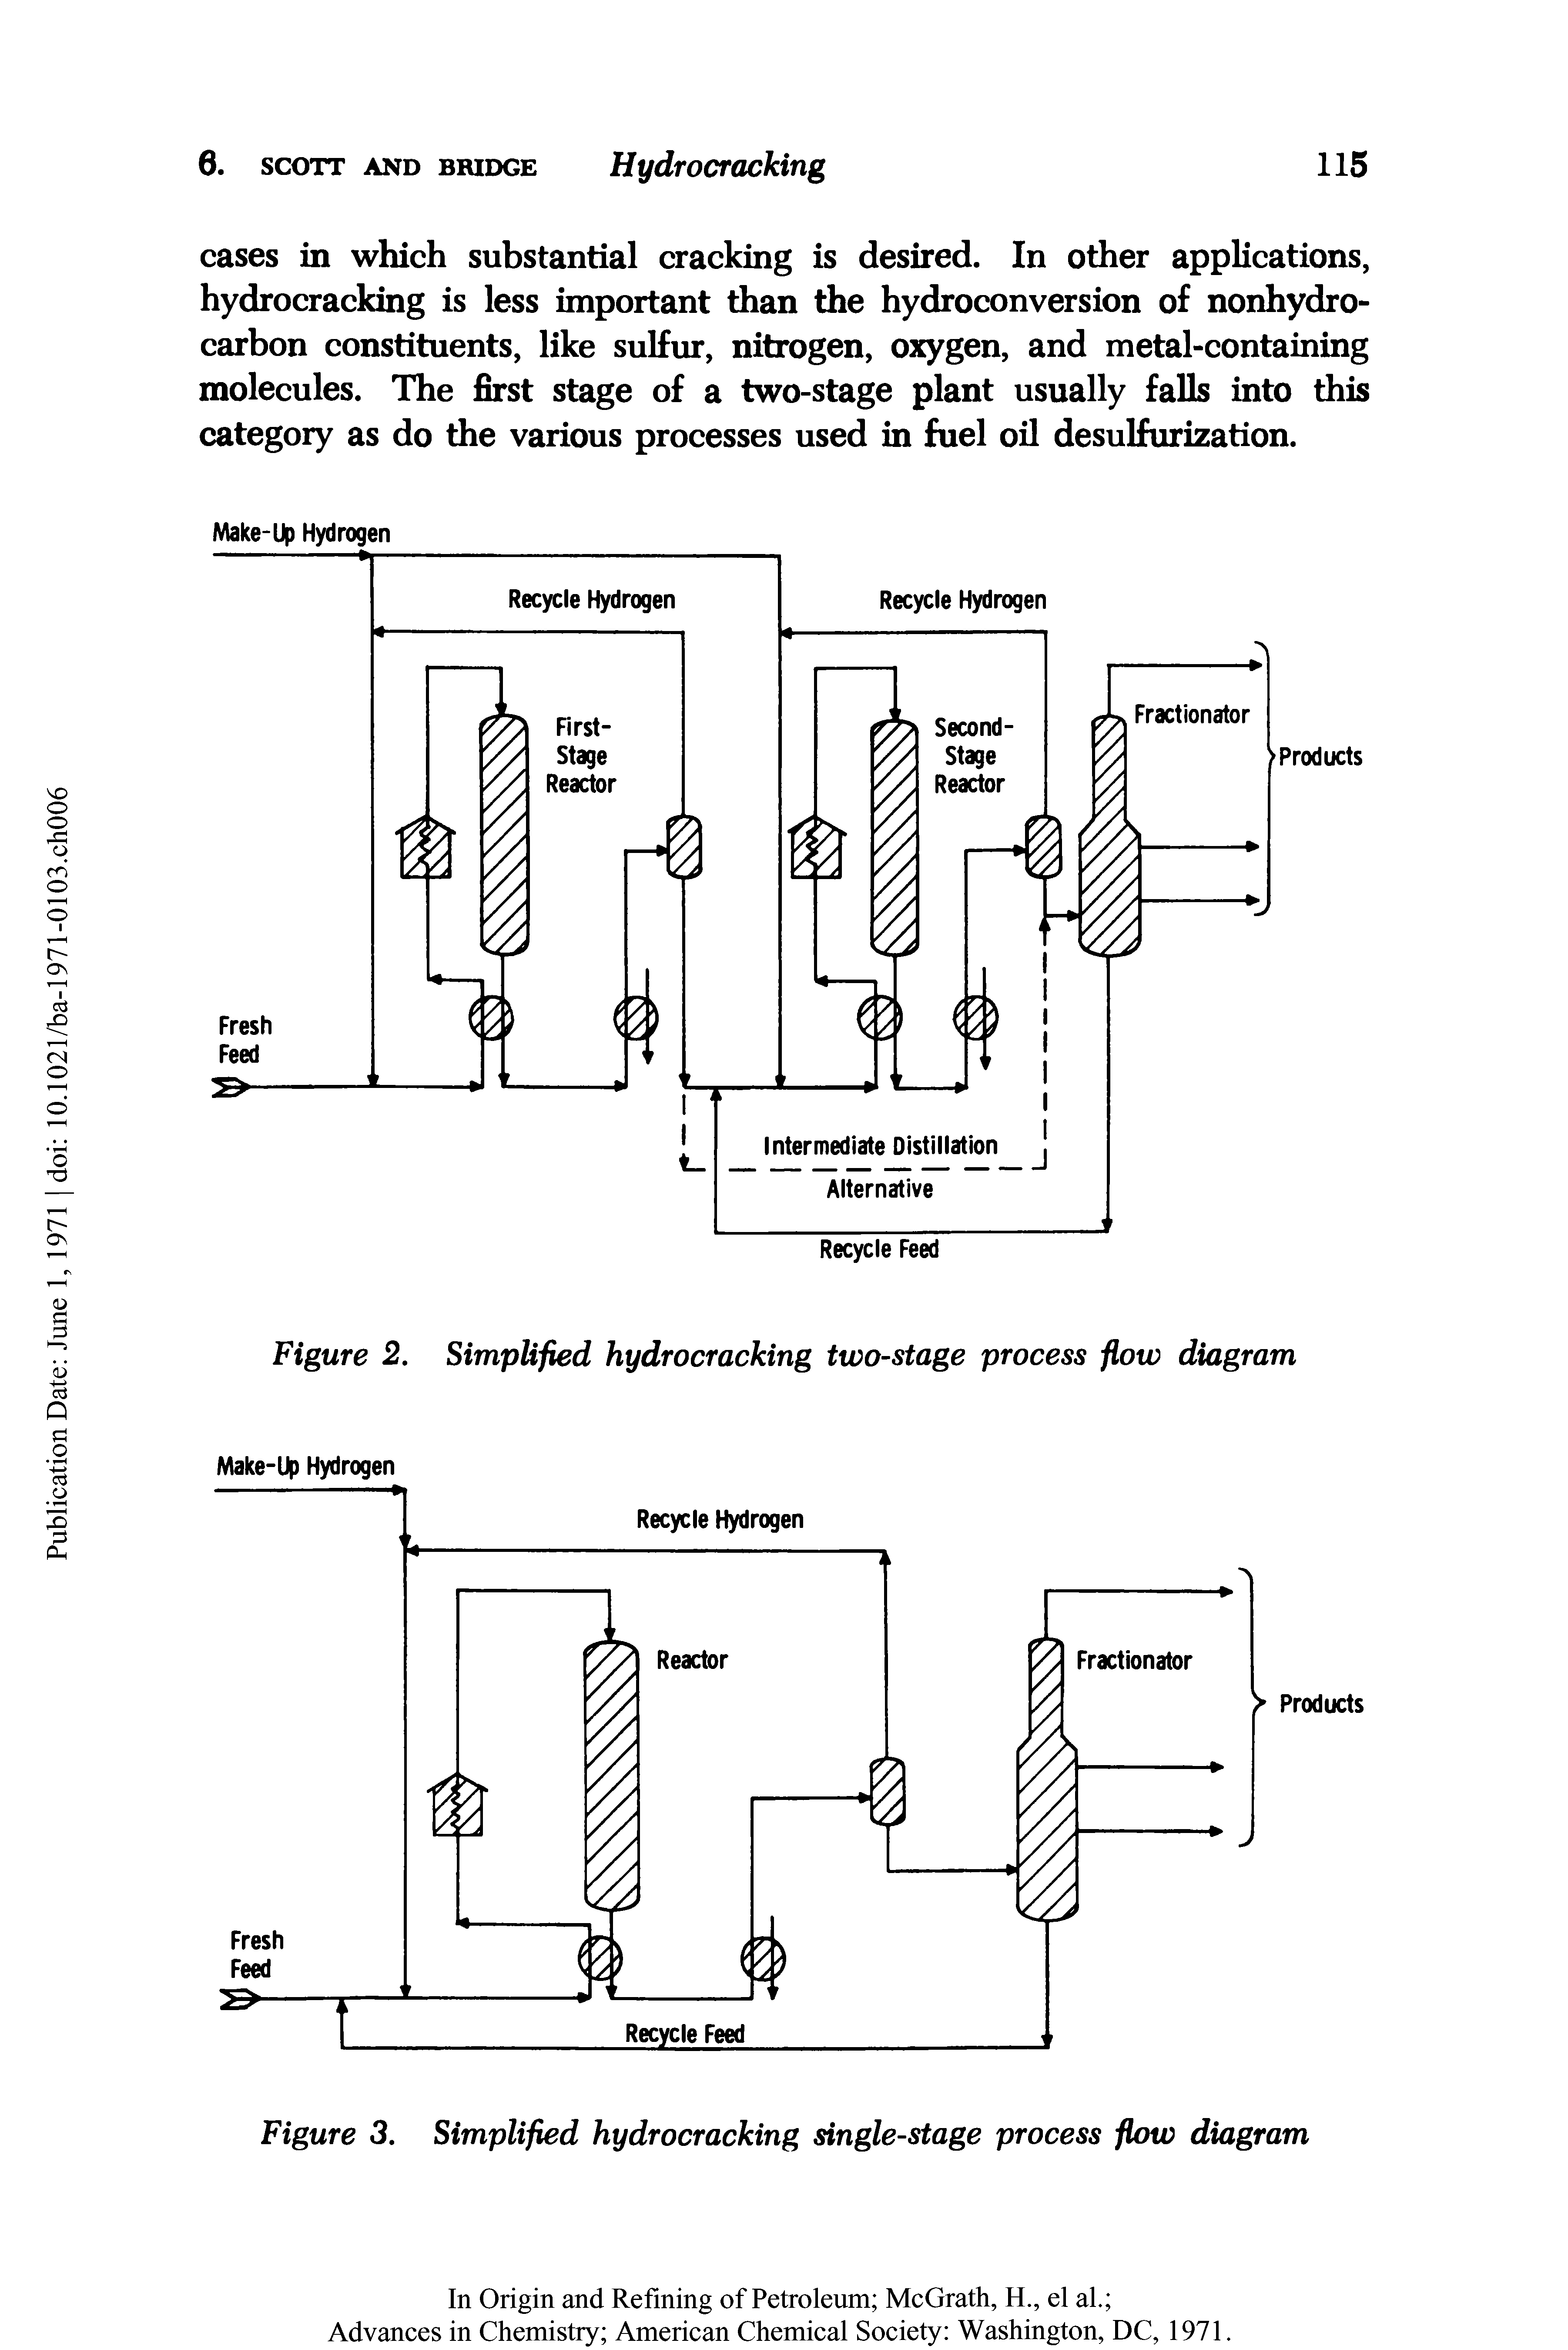 Figure 3. Simplified hydrocracking single-stage process flow diagram...